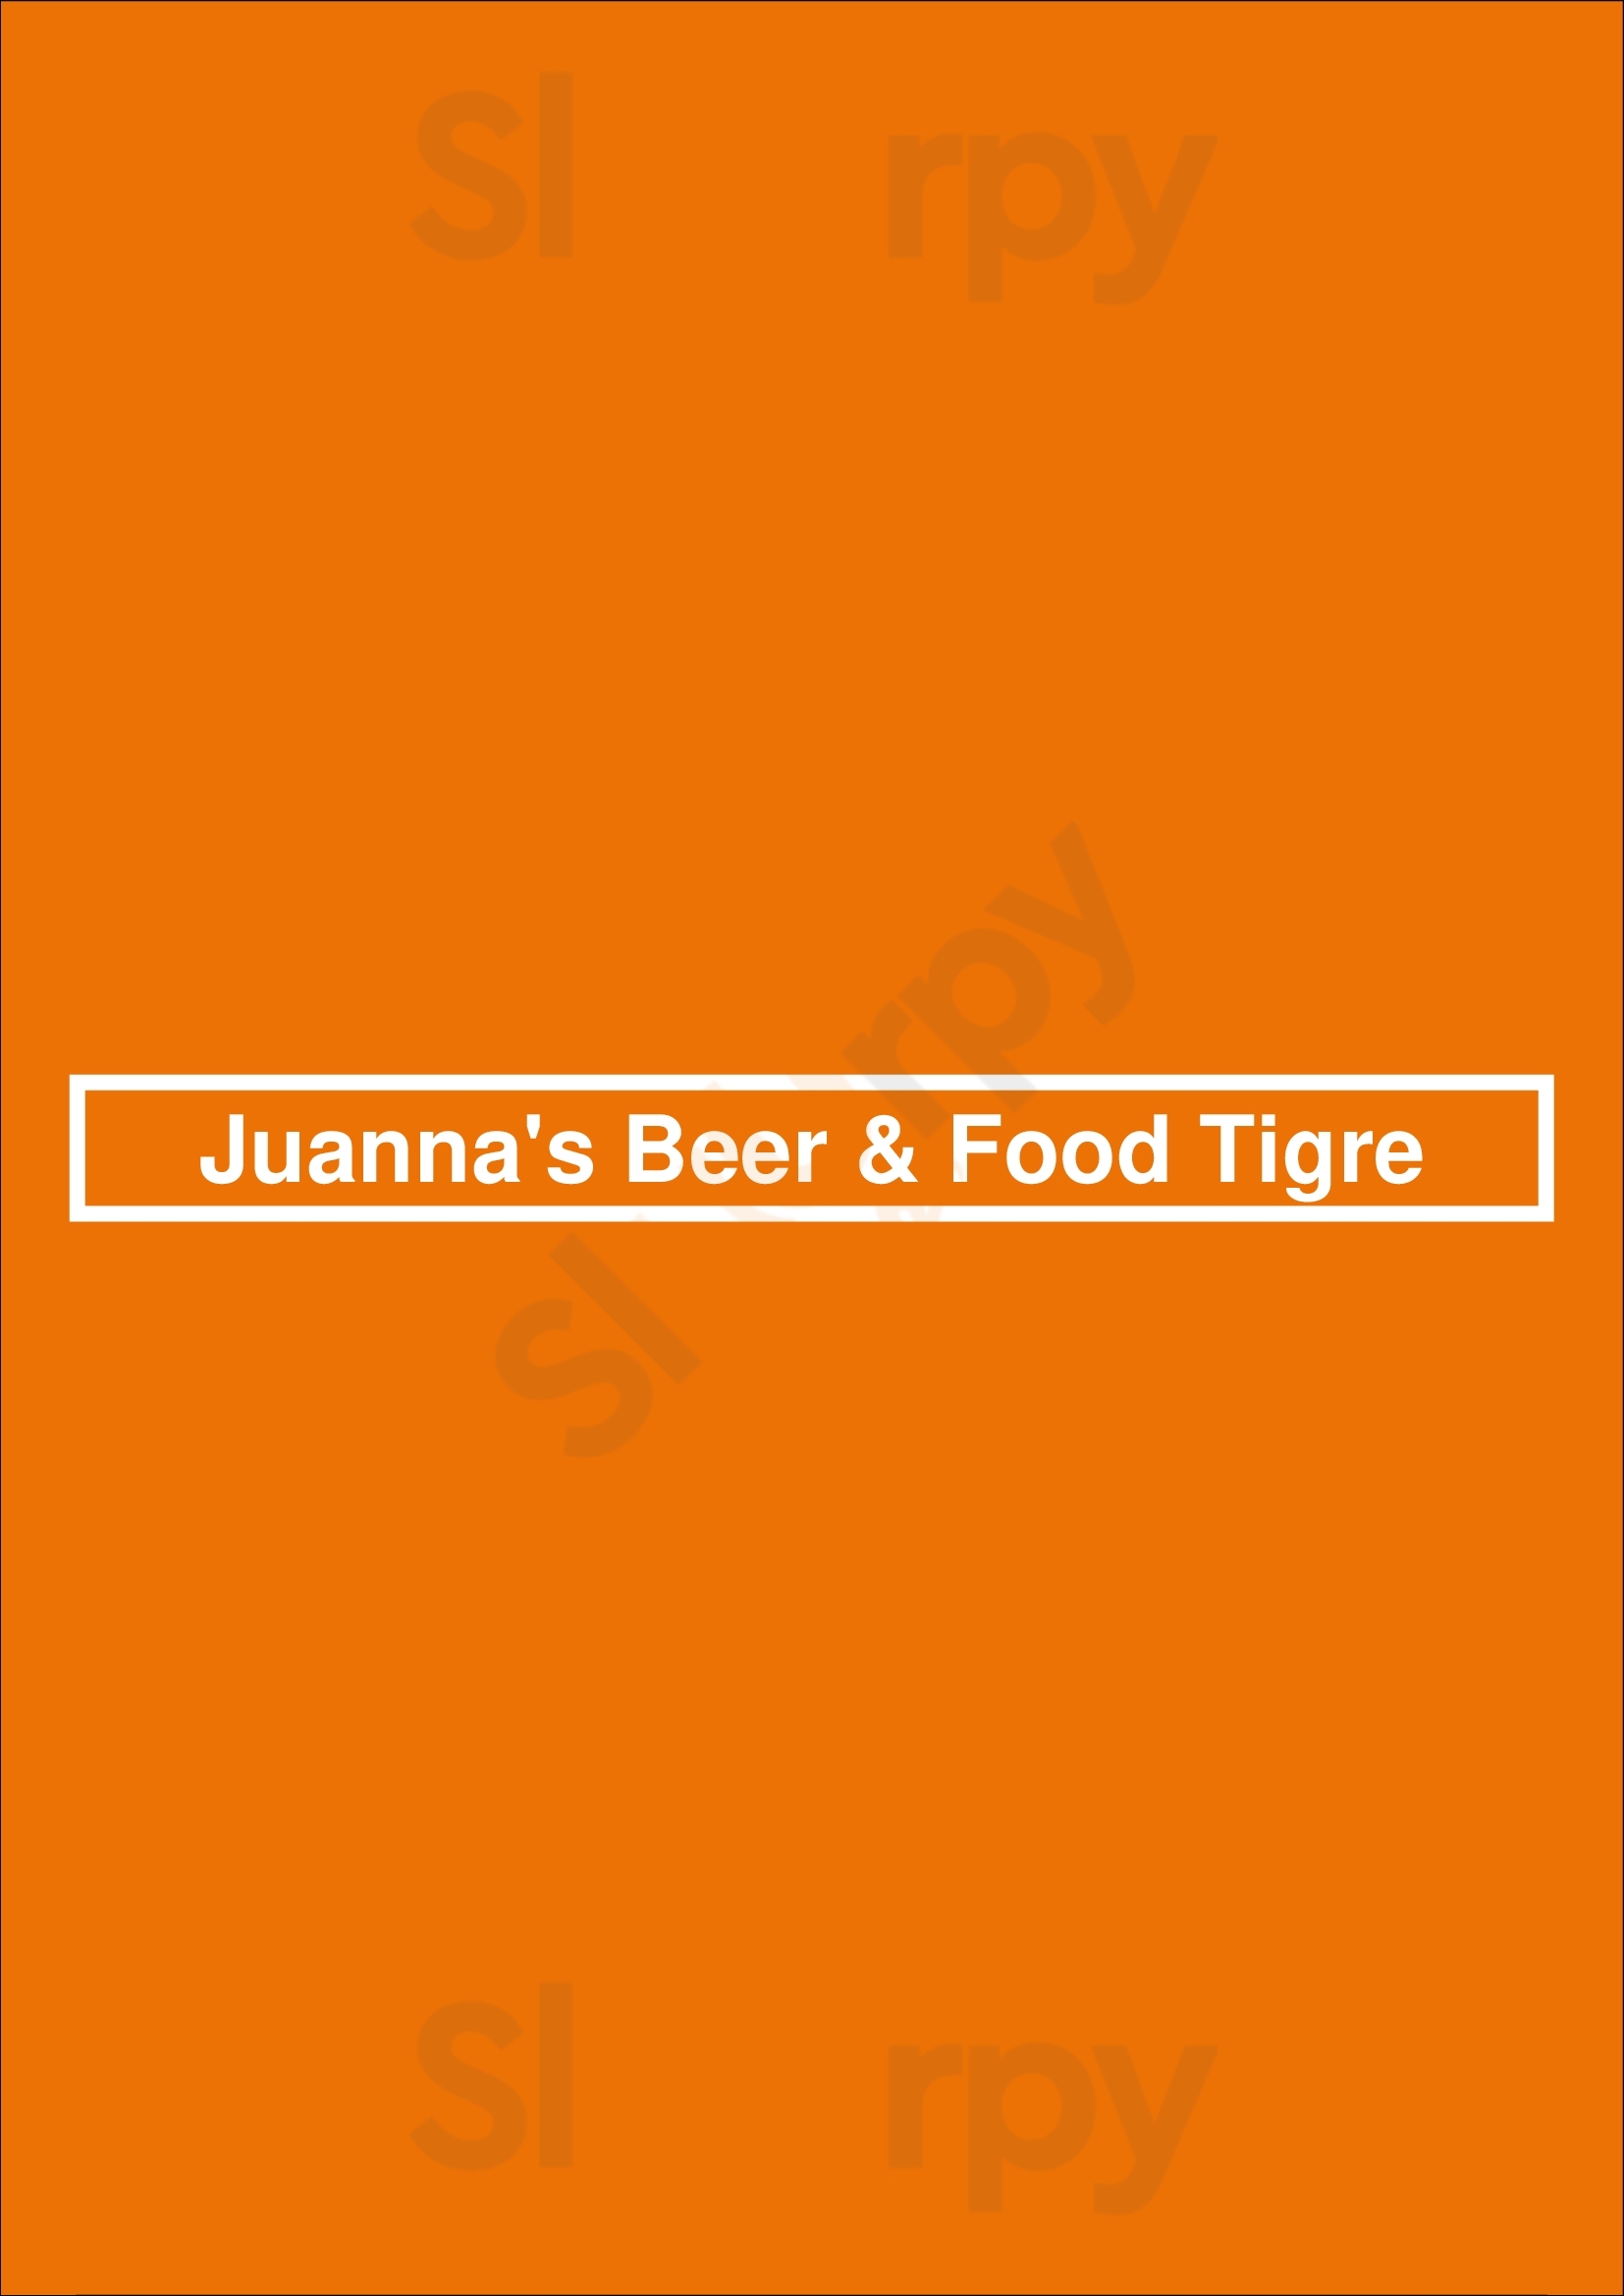 Juanna's Beer & Food Tigre Tigre Menu - 1